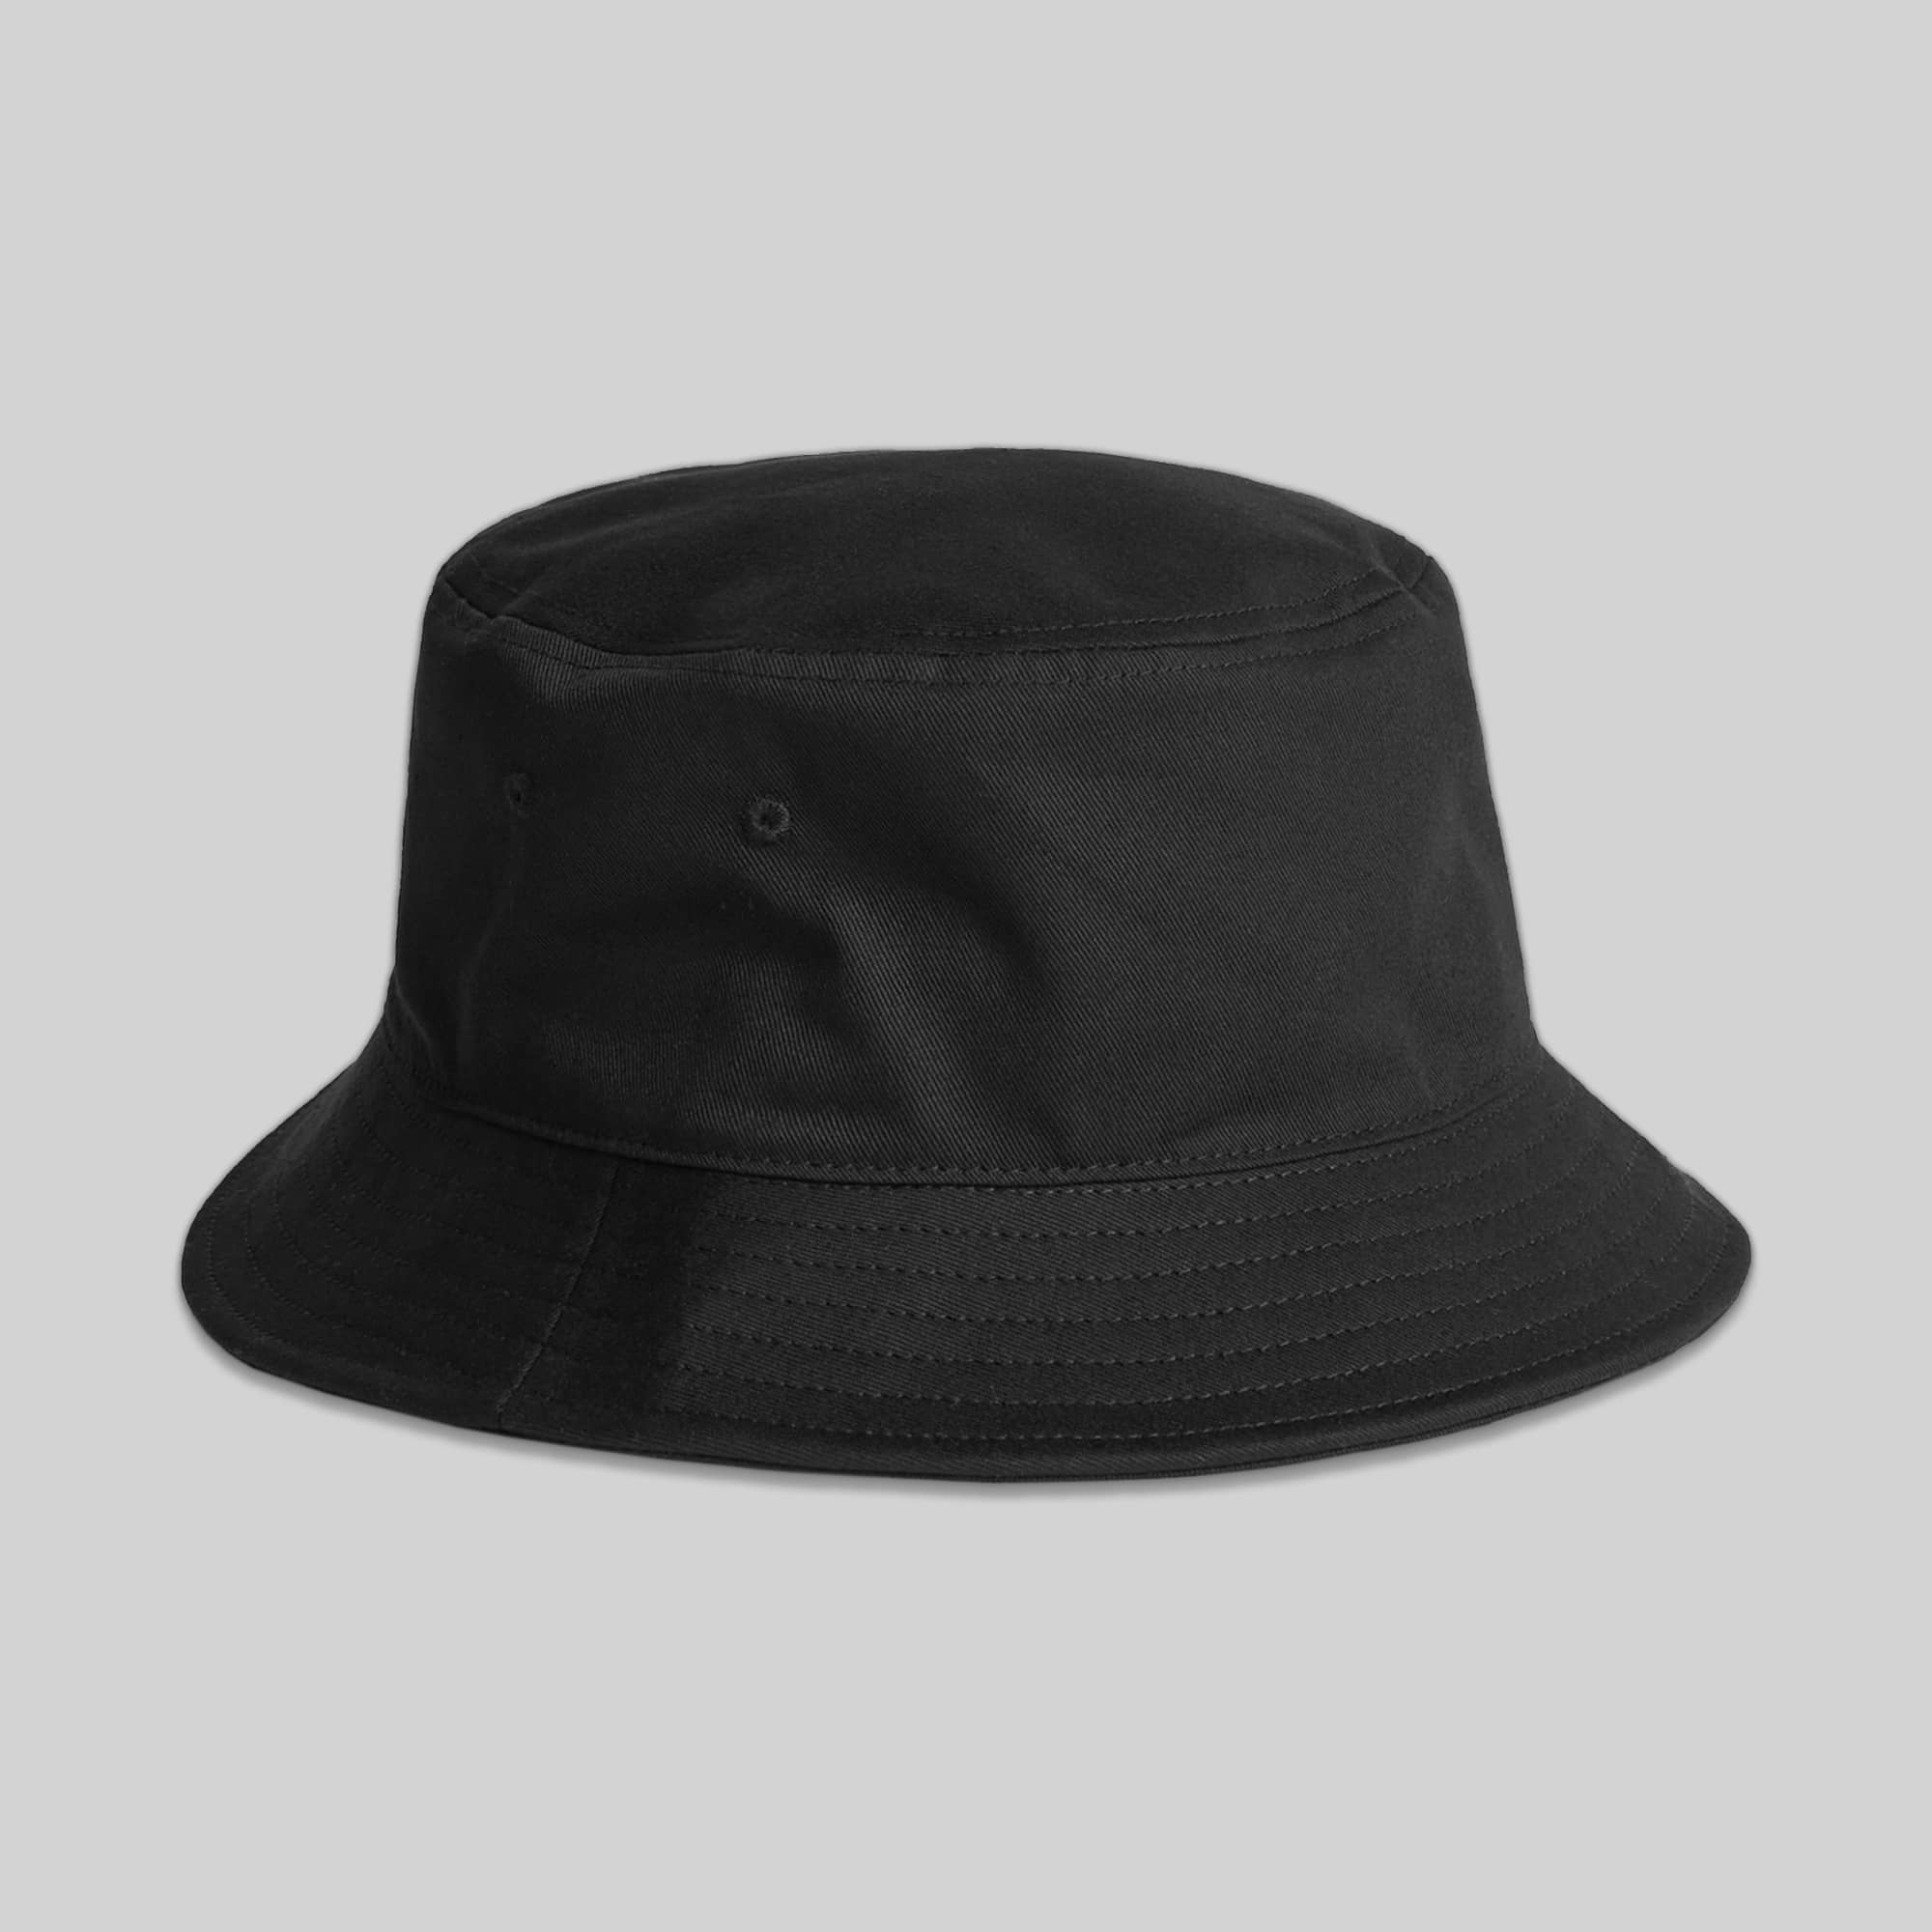 XCVB Black Bucket Hat || UK Independent Streetwear Clothing Brand | XCVB